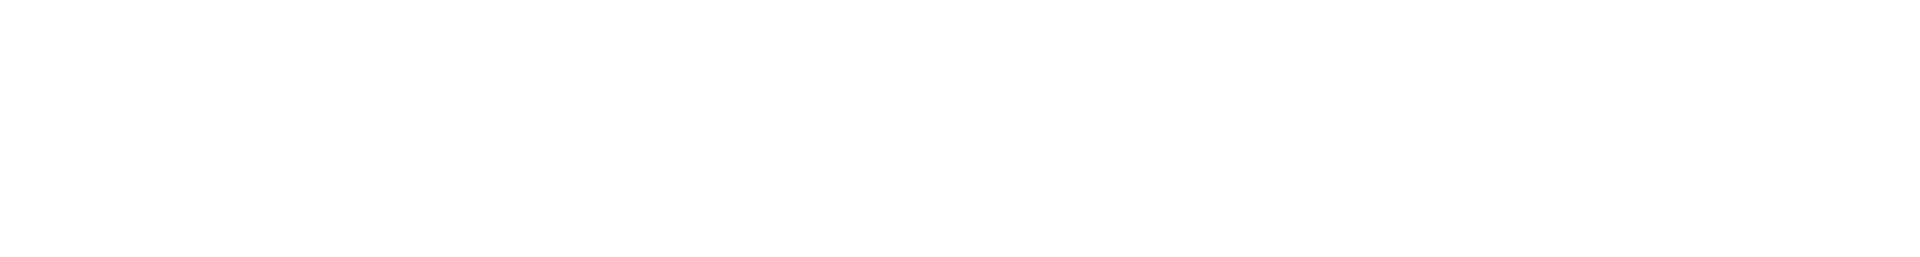 Comparethediamond.com Logo